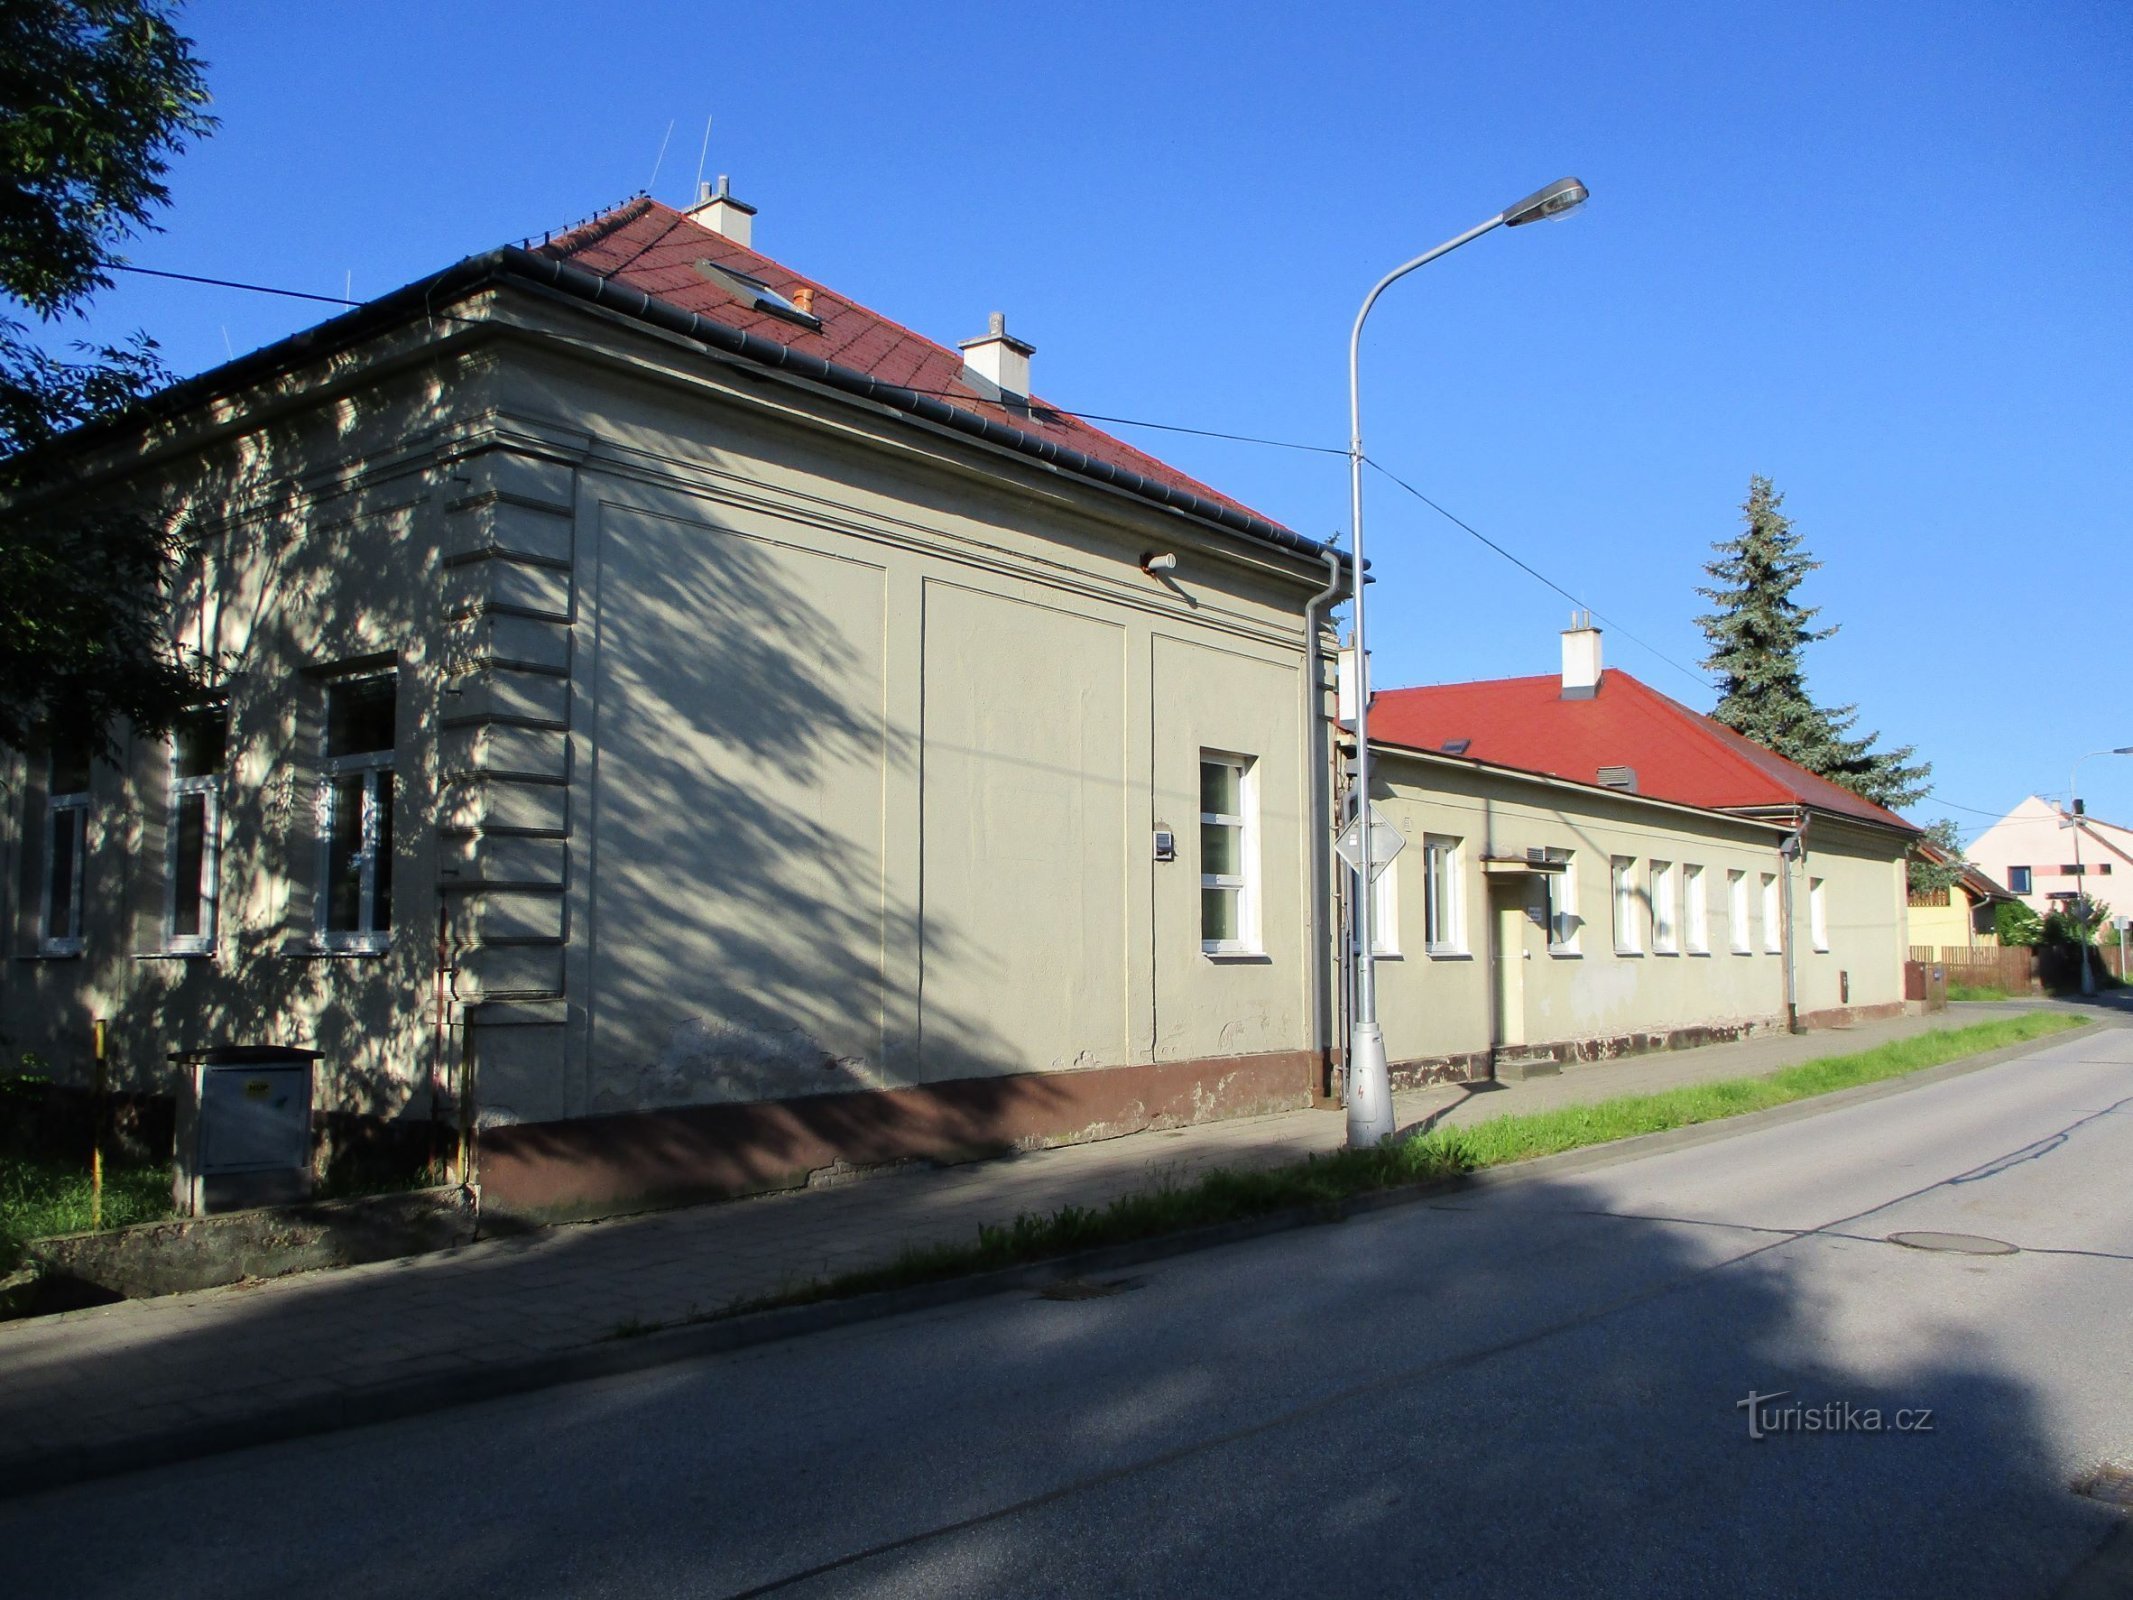 School in Březhrad (Hradec Králové, 9.6.2019/XNUMX/XNUMX)